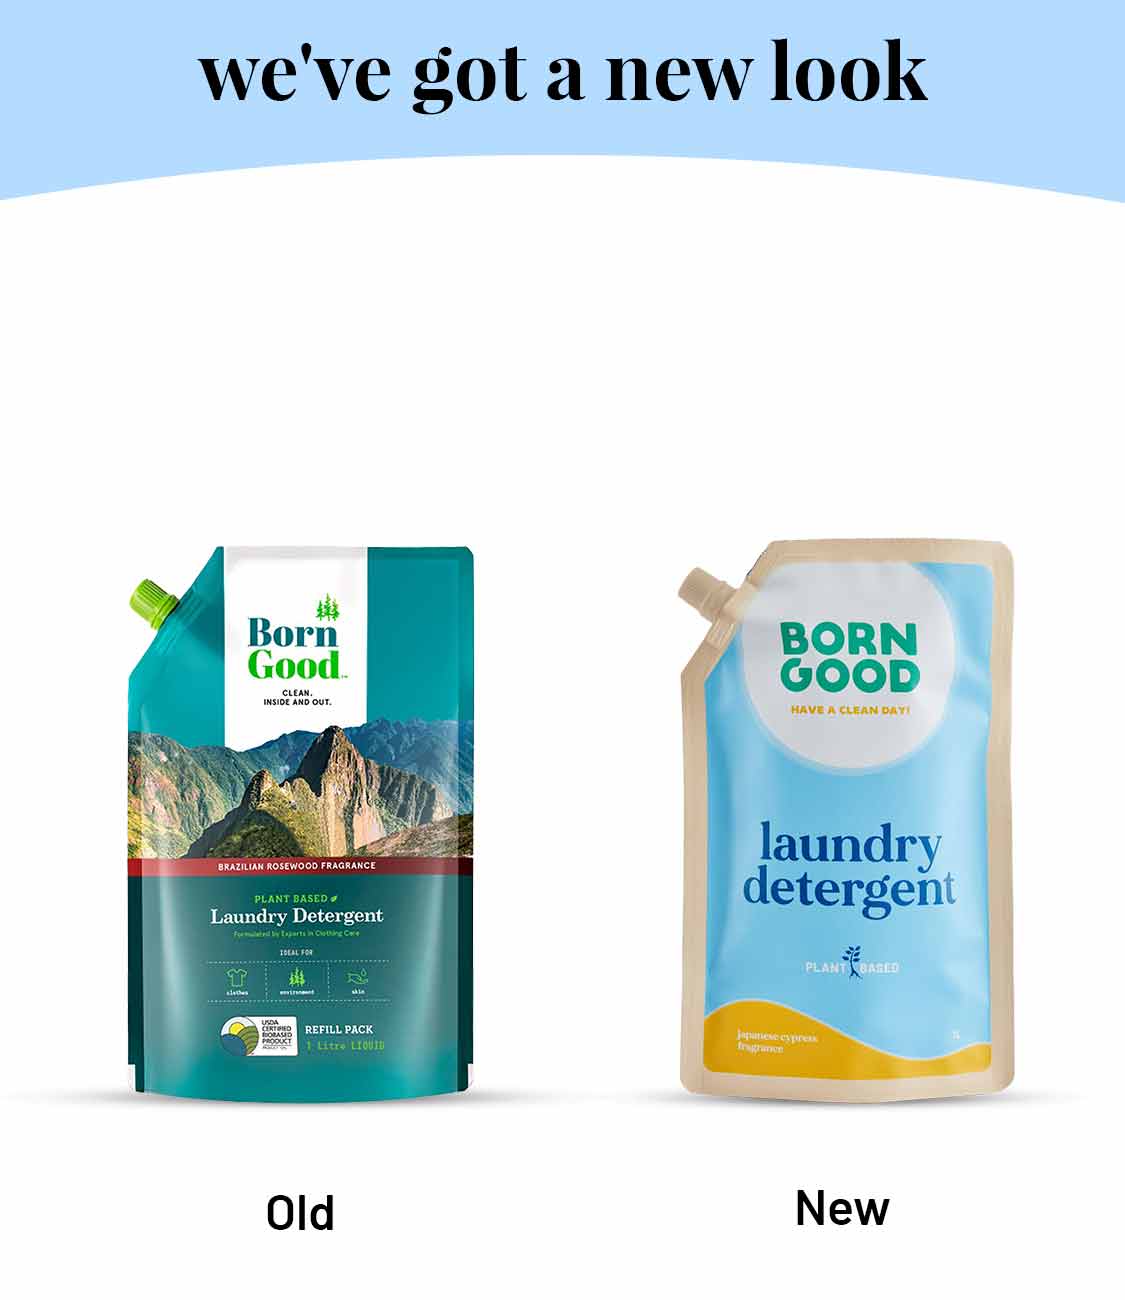 Born Good Plant-based Fragrance Laundry Detergent (Japanese Cypress) - 1 L Refill